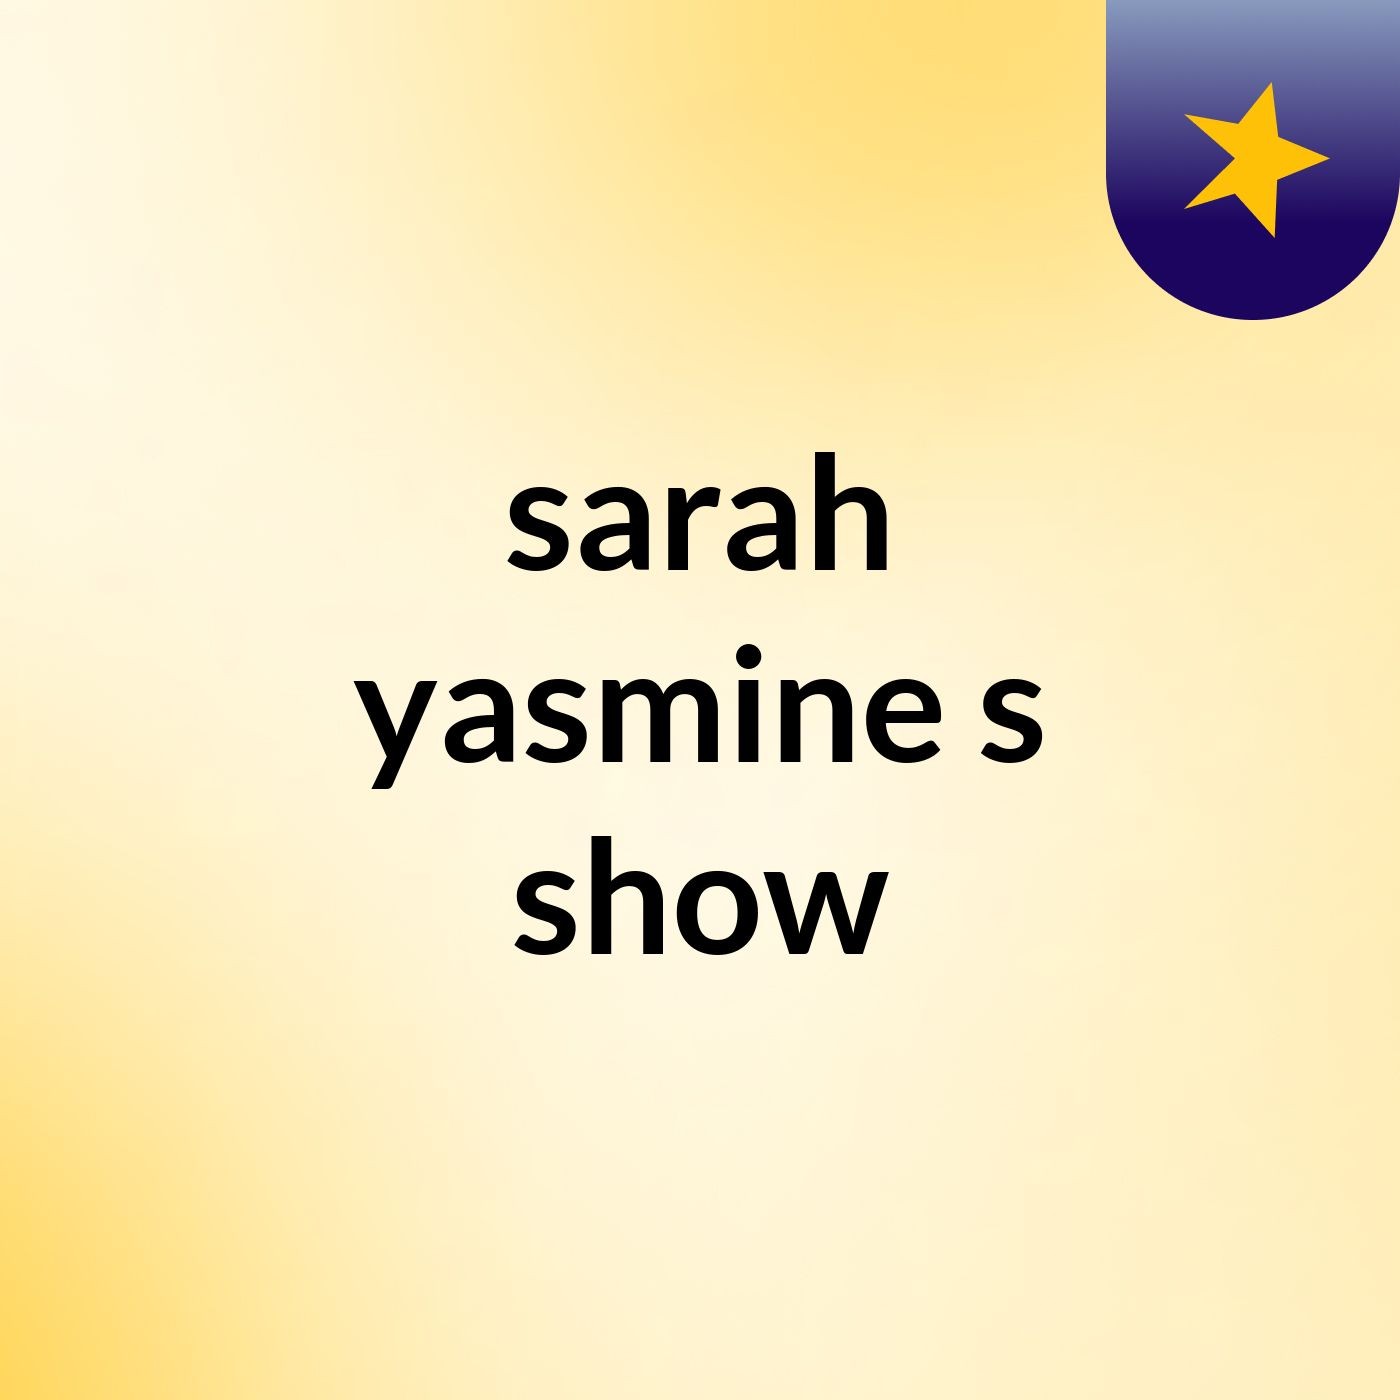 sarah yasmine's show